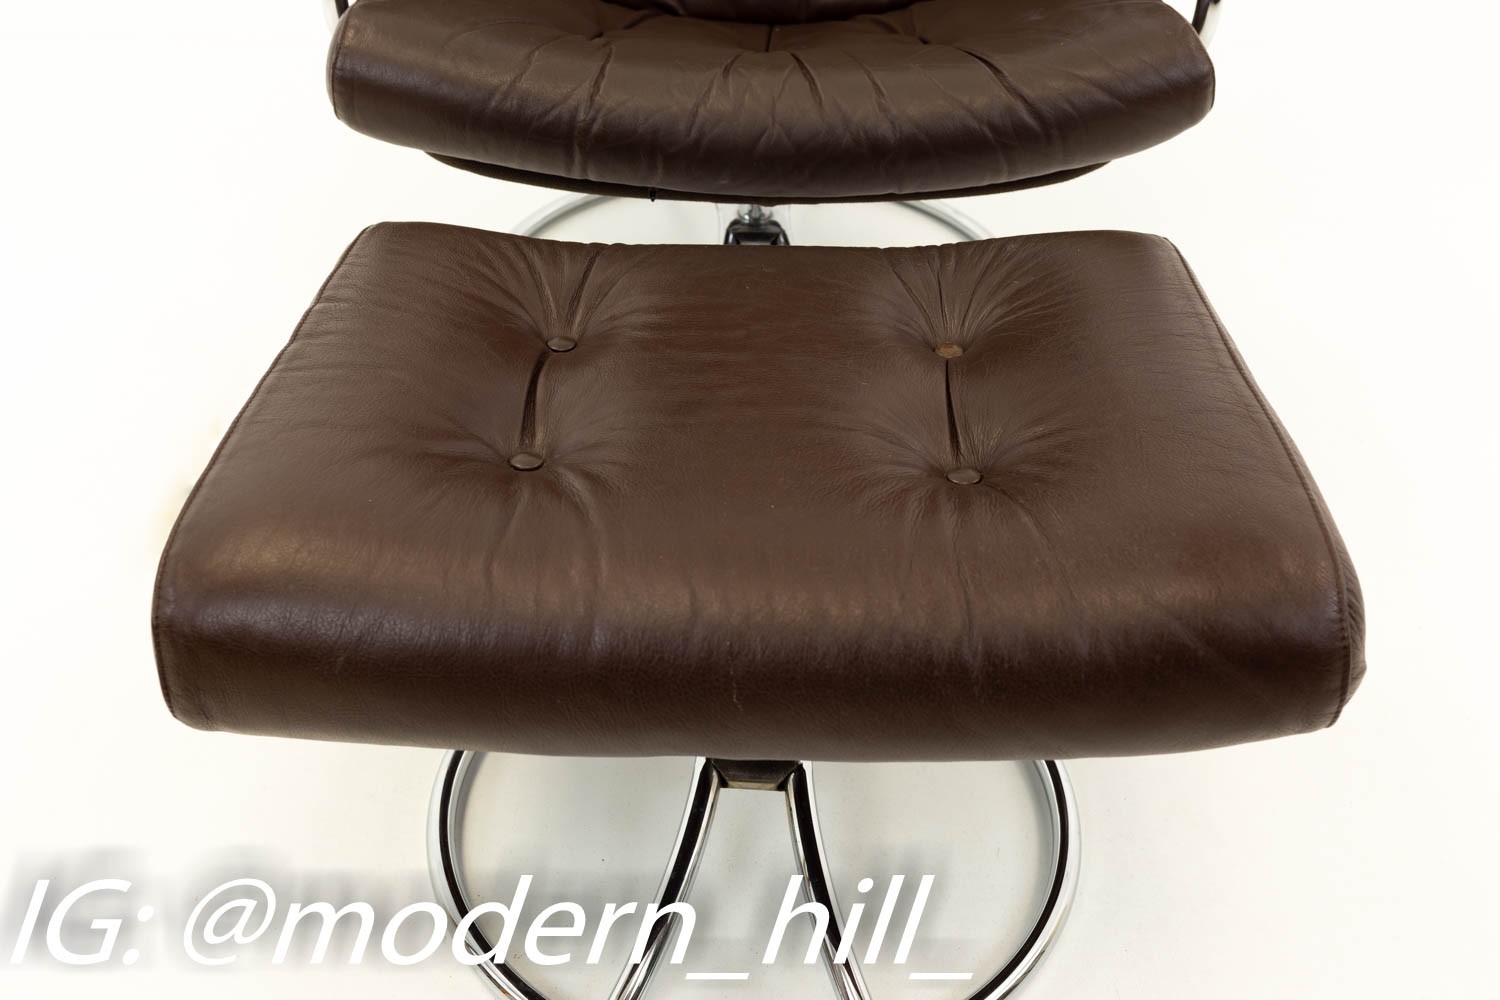 Ekornes Stressless Reclining Swivel Brown Leather Mid Century Modern Lounge Chair & Ottoman